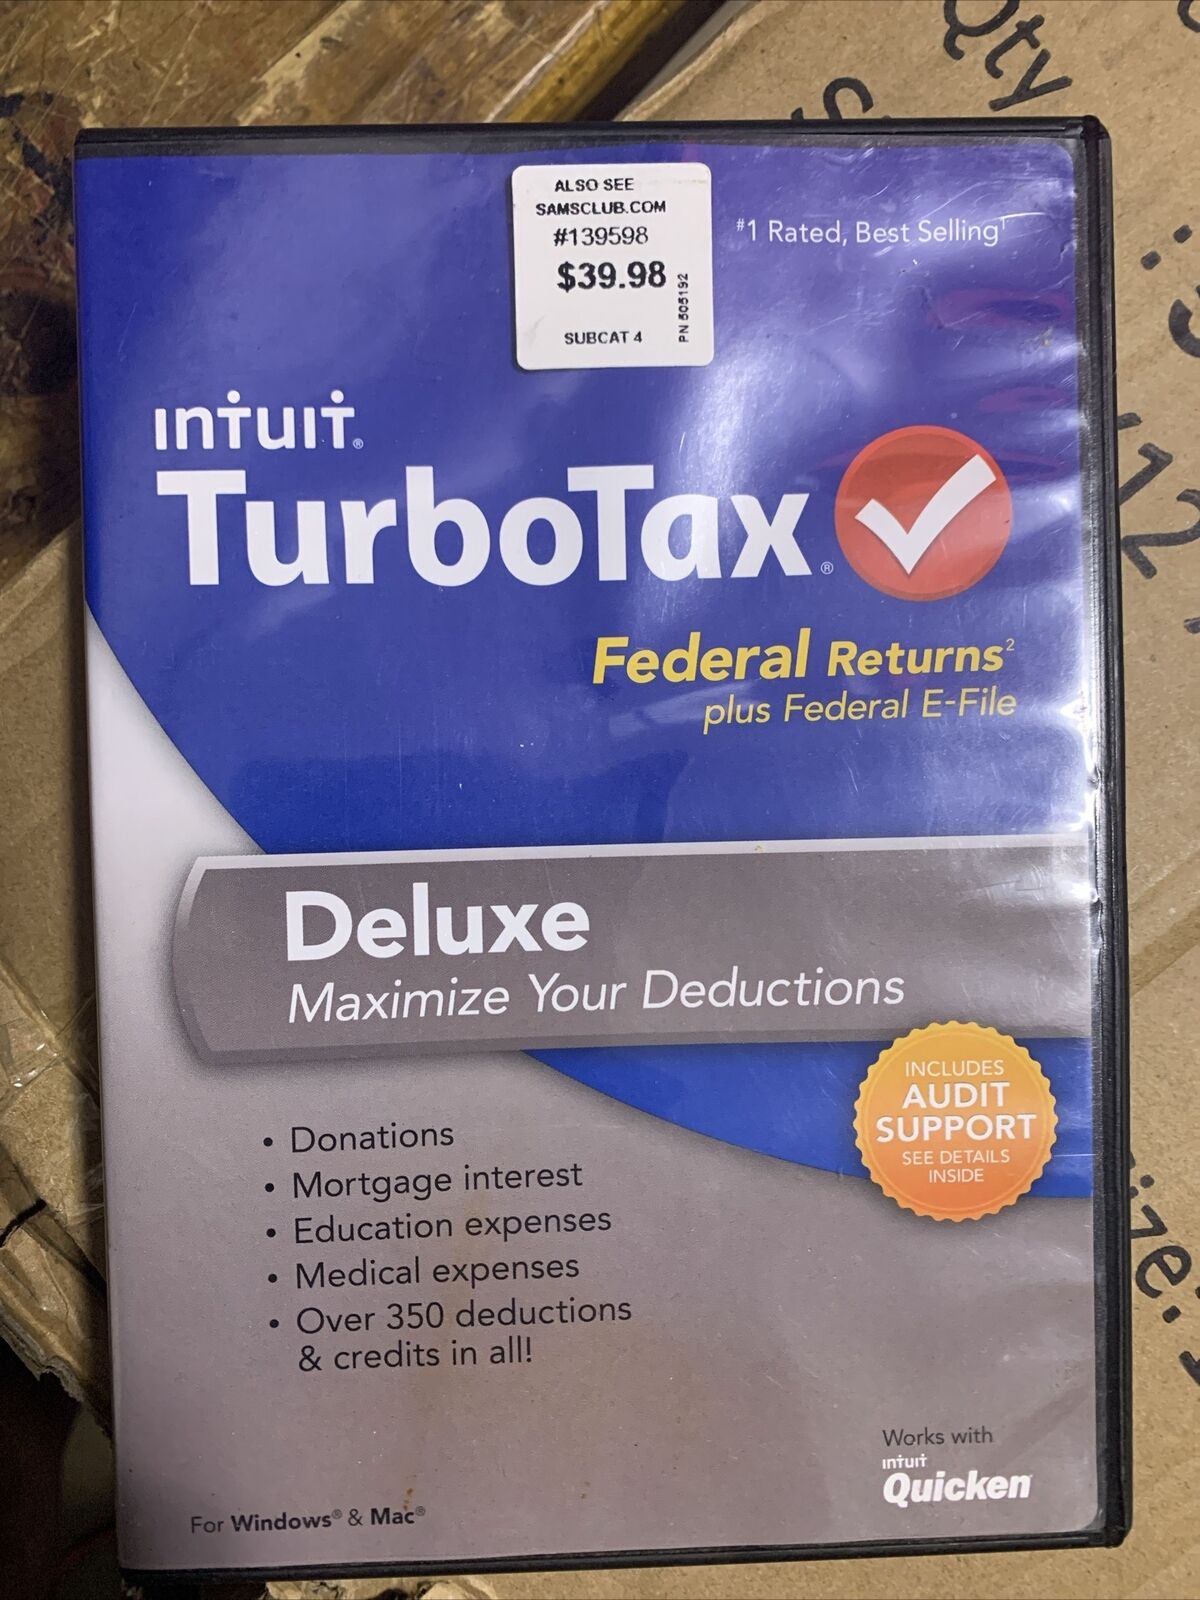 Intuit Turbotax Deluxe 2013 Federal Returns Plus E-File Turbo Tax PC/MAC